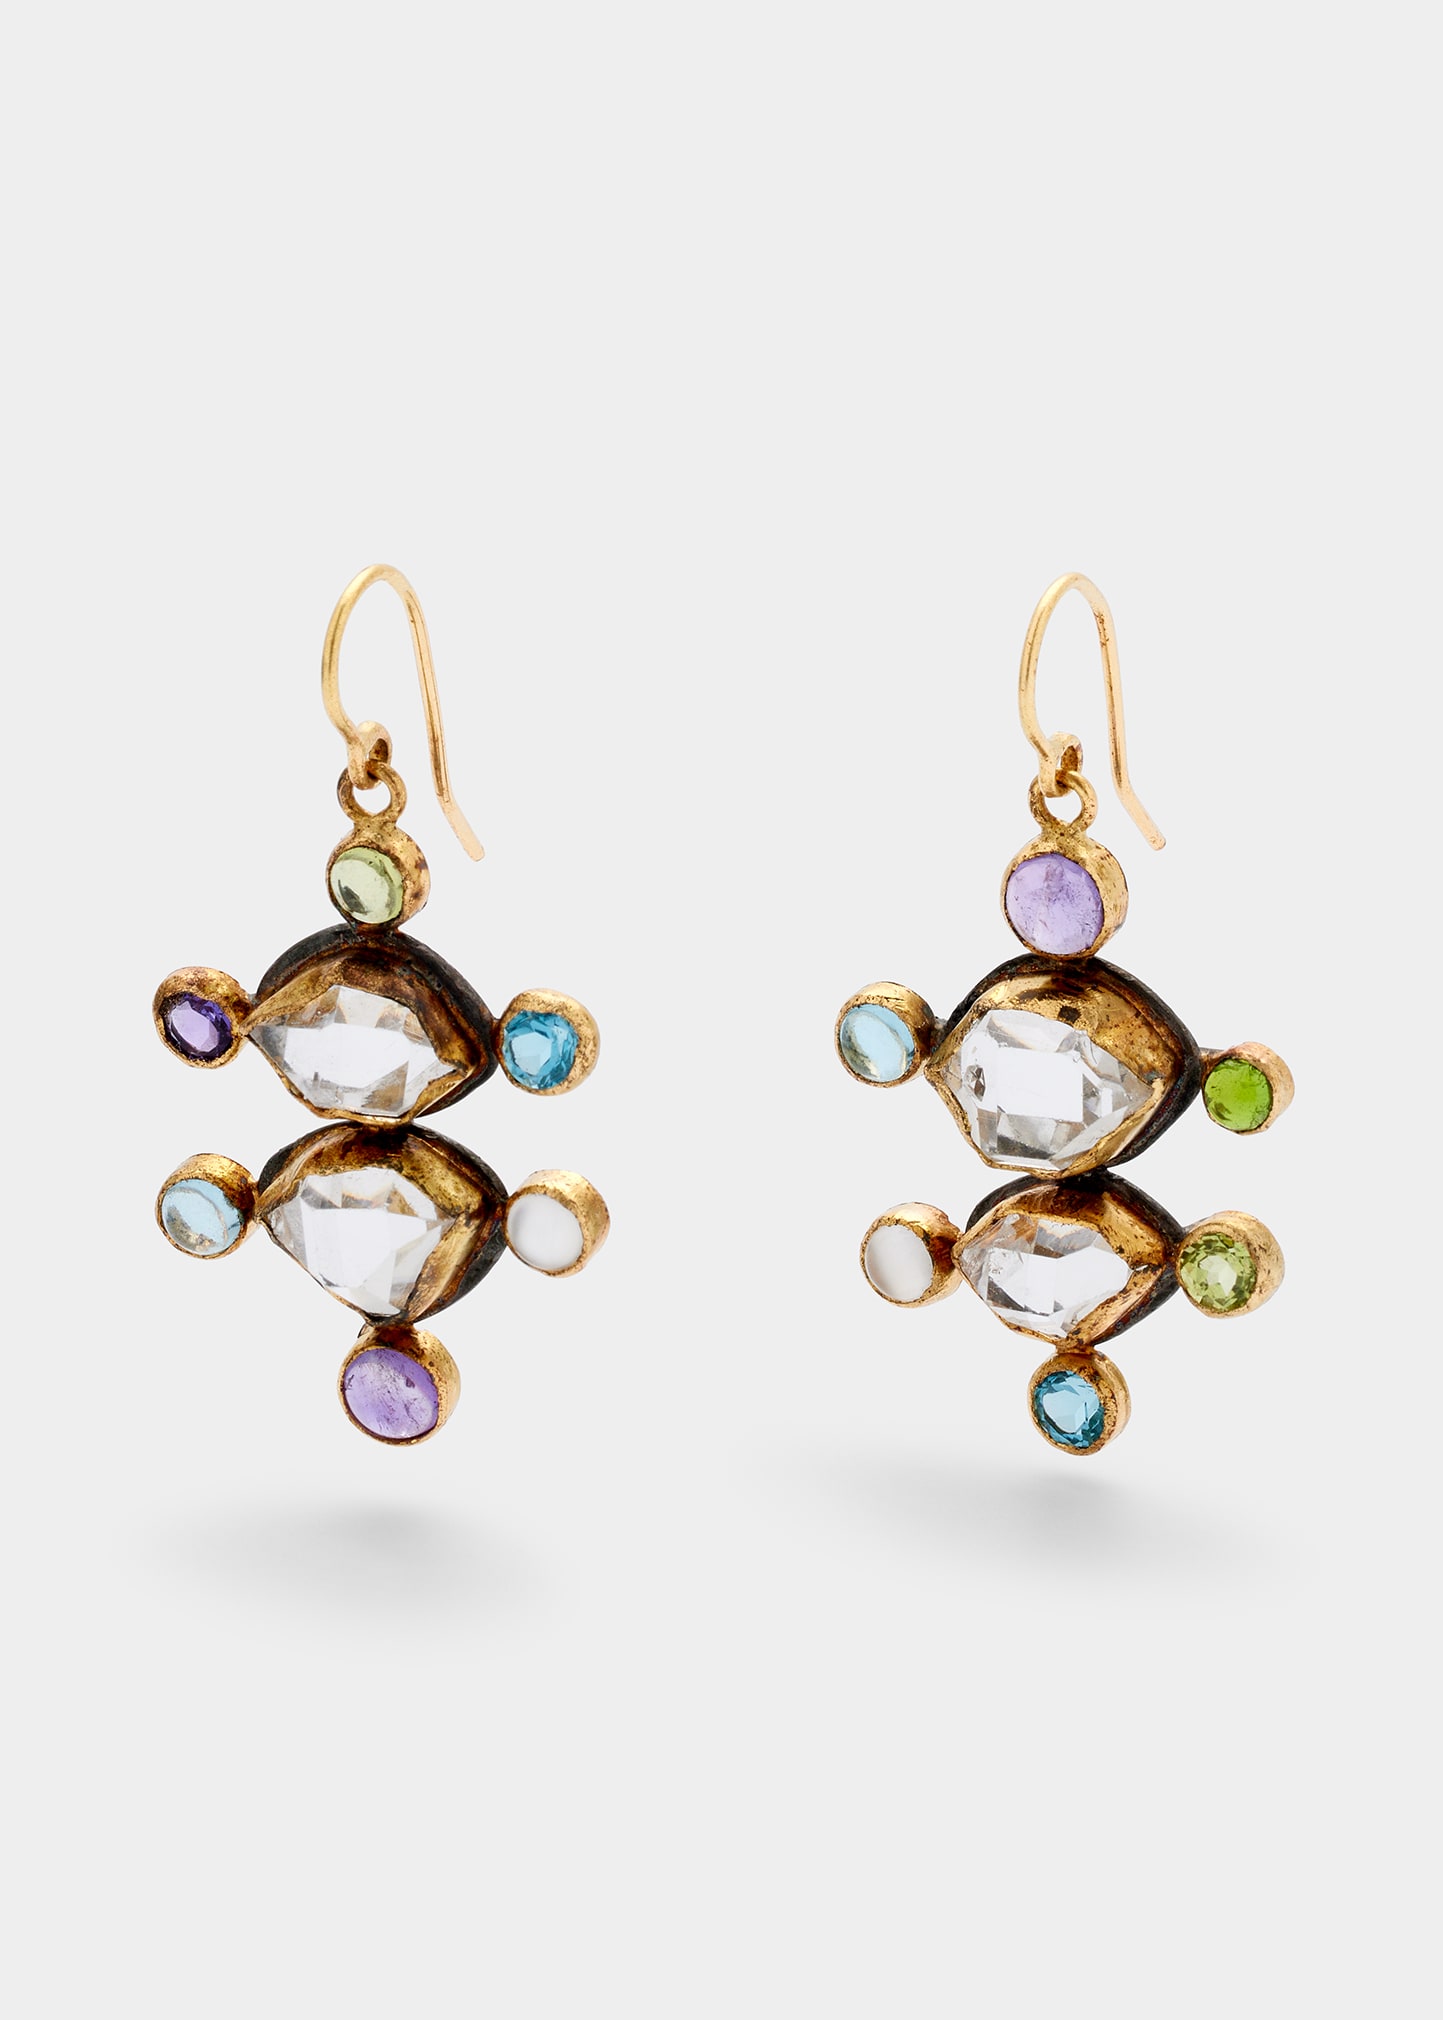 JUDY GEIB Herkimer Diamond and Colorful Gems Earrings